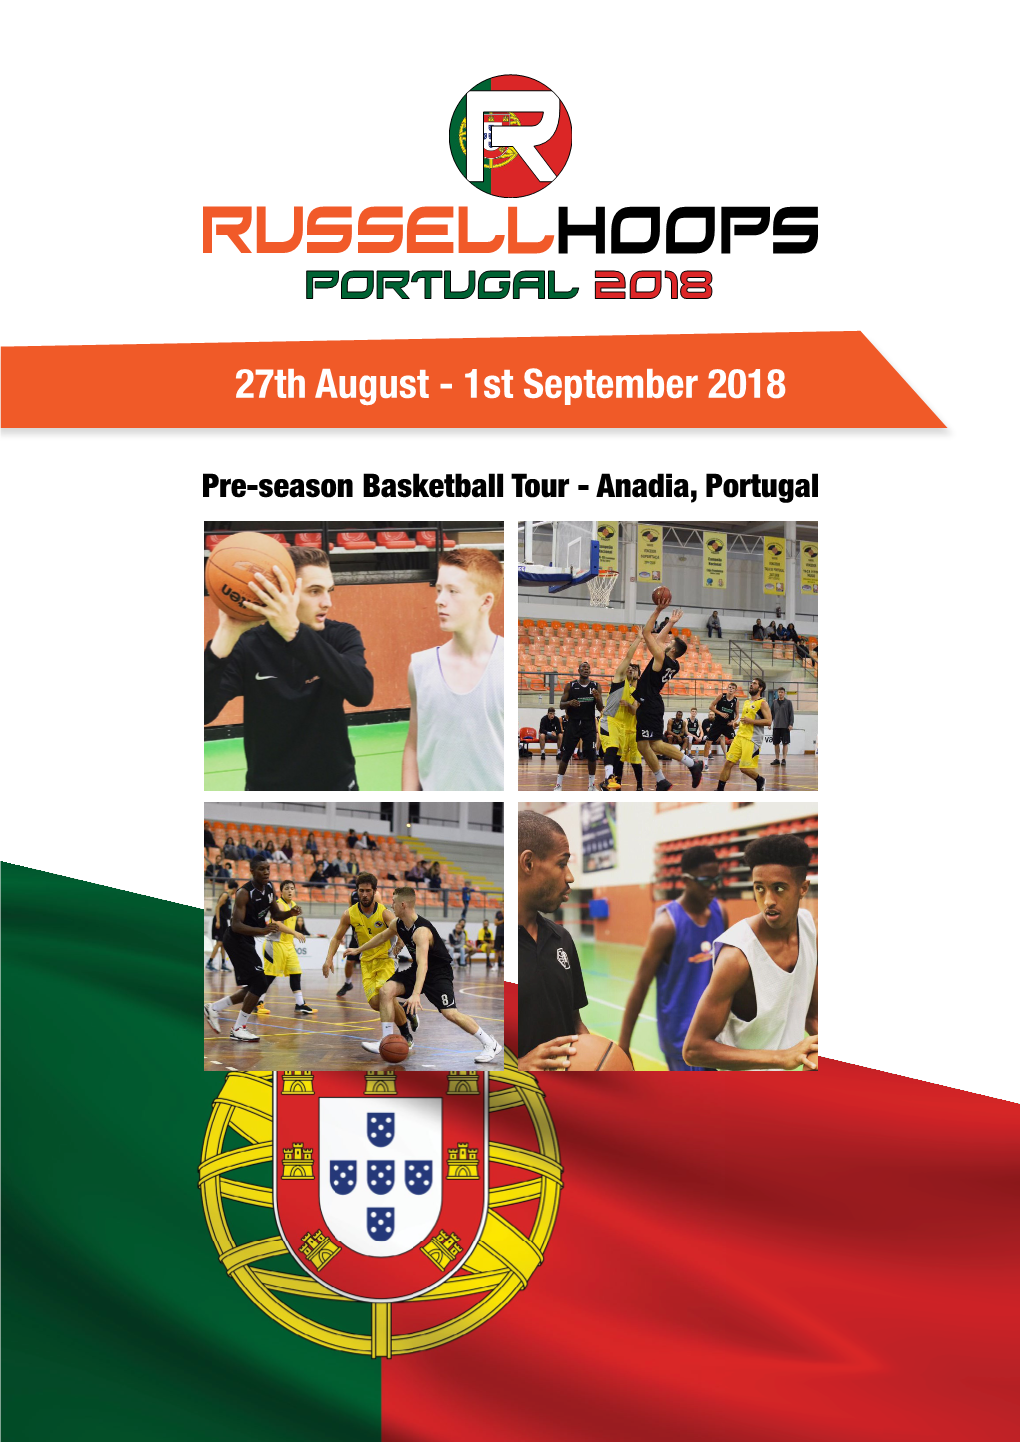 Basketball Tour - Anadia, Portugal Welcome